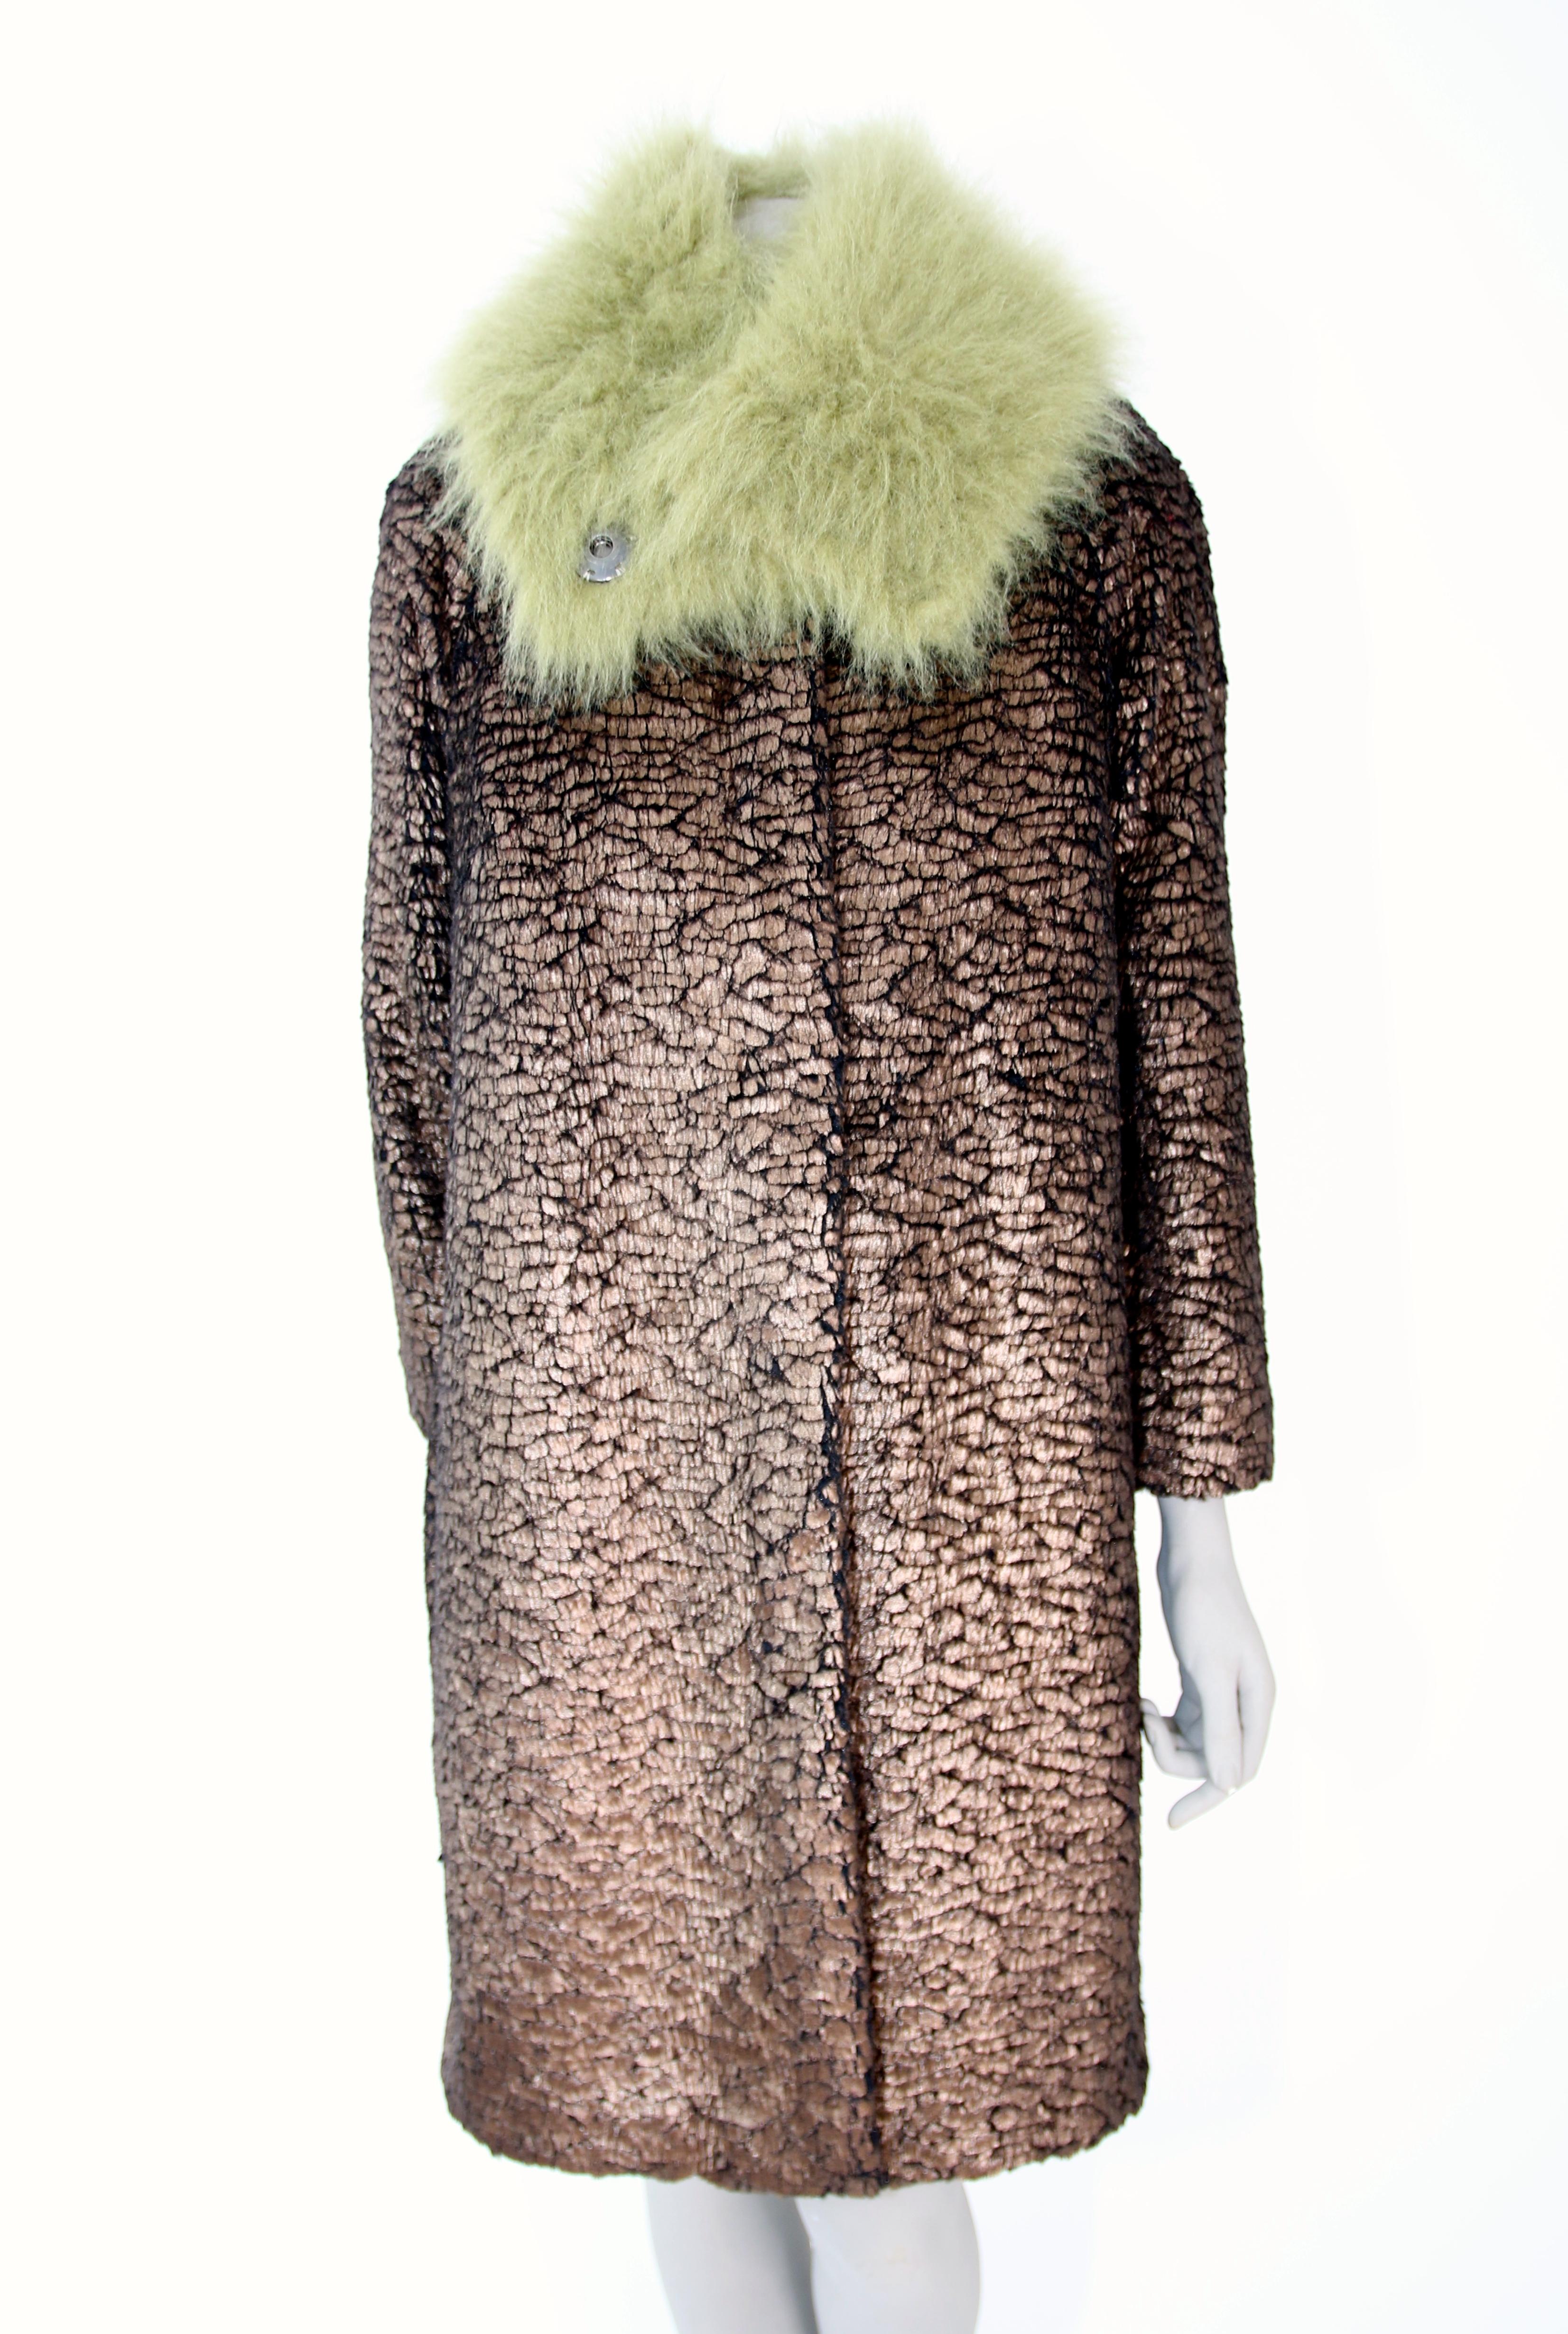 Pelush Faux Fur Scarfs set - Fake Fur Green Chinchilla Neck Warmer/Hats One size For Sale 3